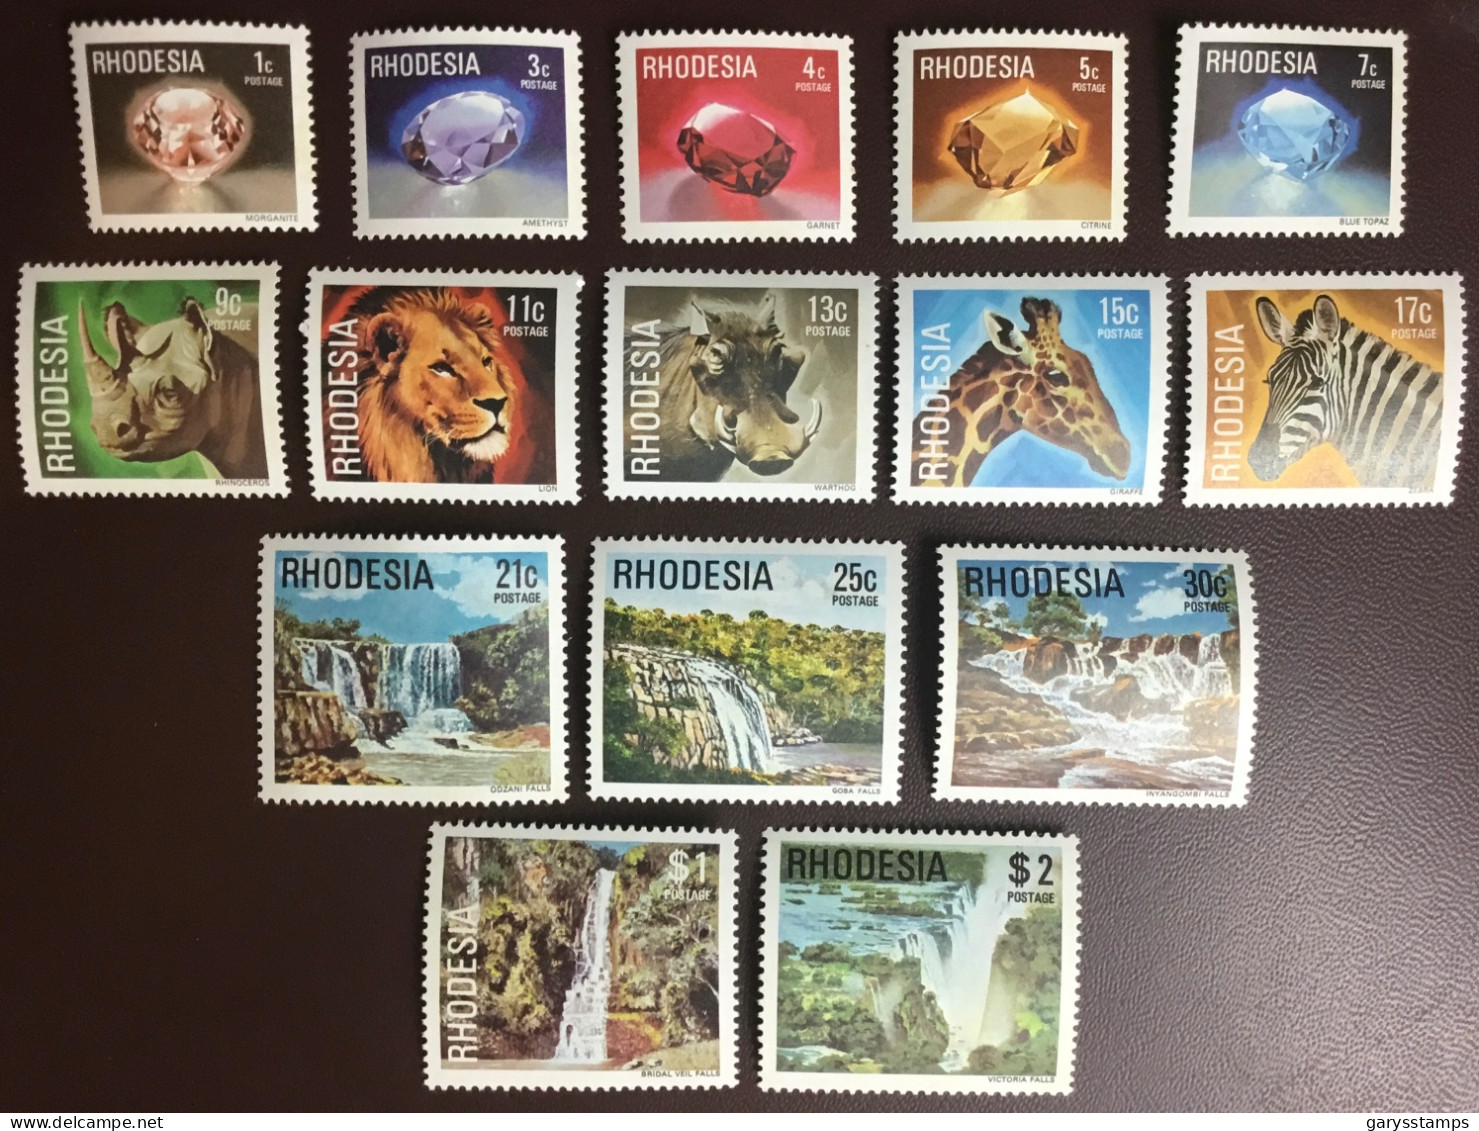 Rhodesia 1978 Definitives Set Animals MNH - Rhodesia (1964-1980)